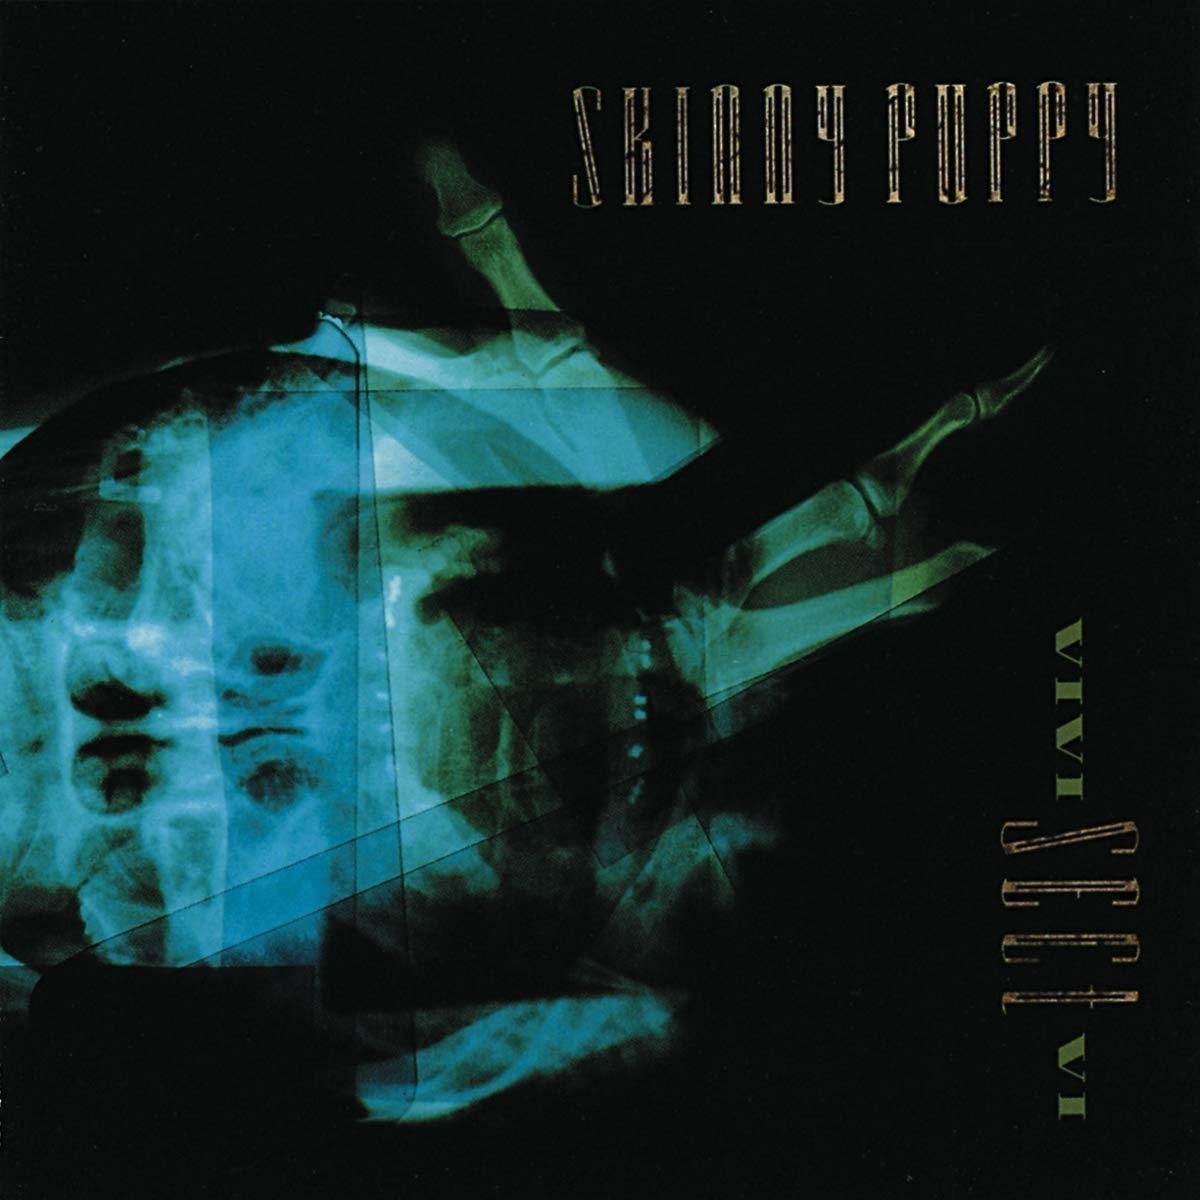 LP deska Skinny Puppy - Vivi Sect Vi (LP)